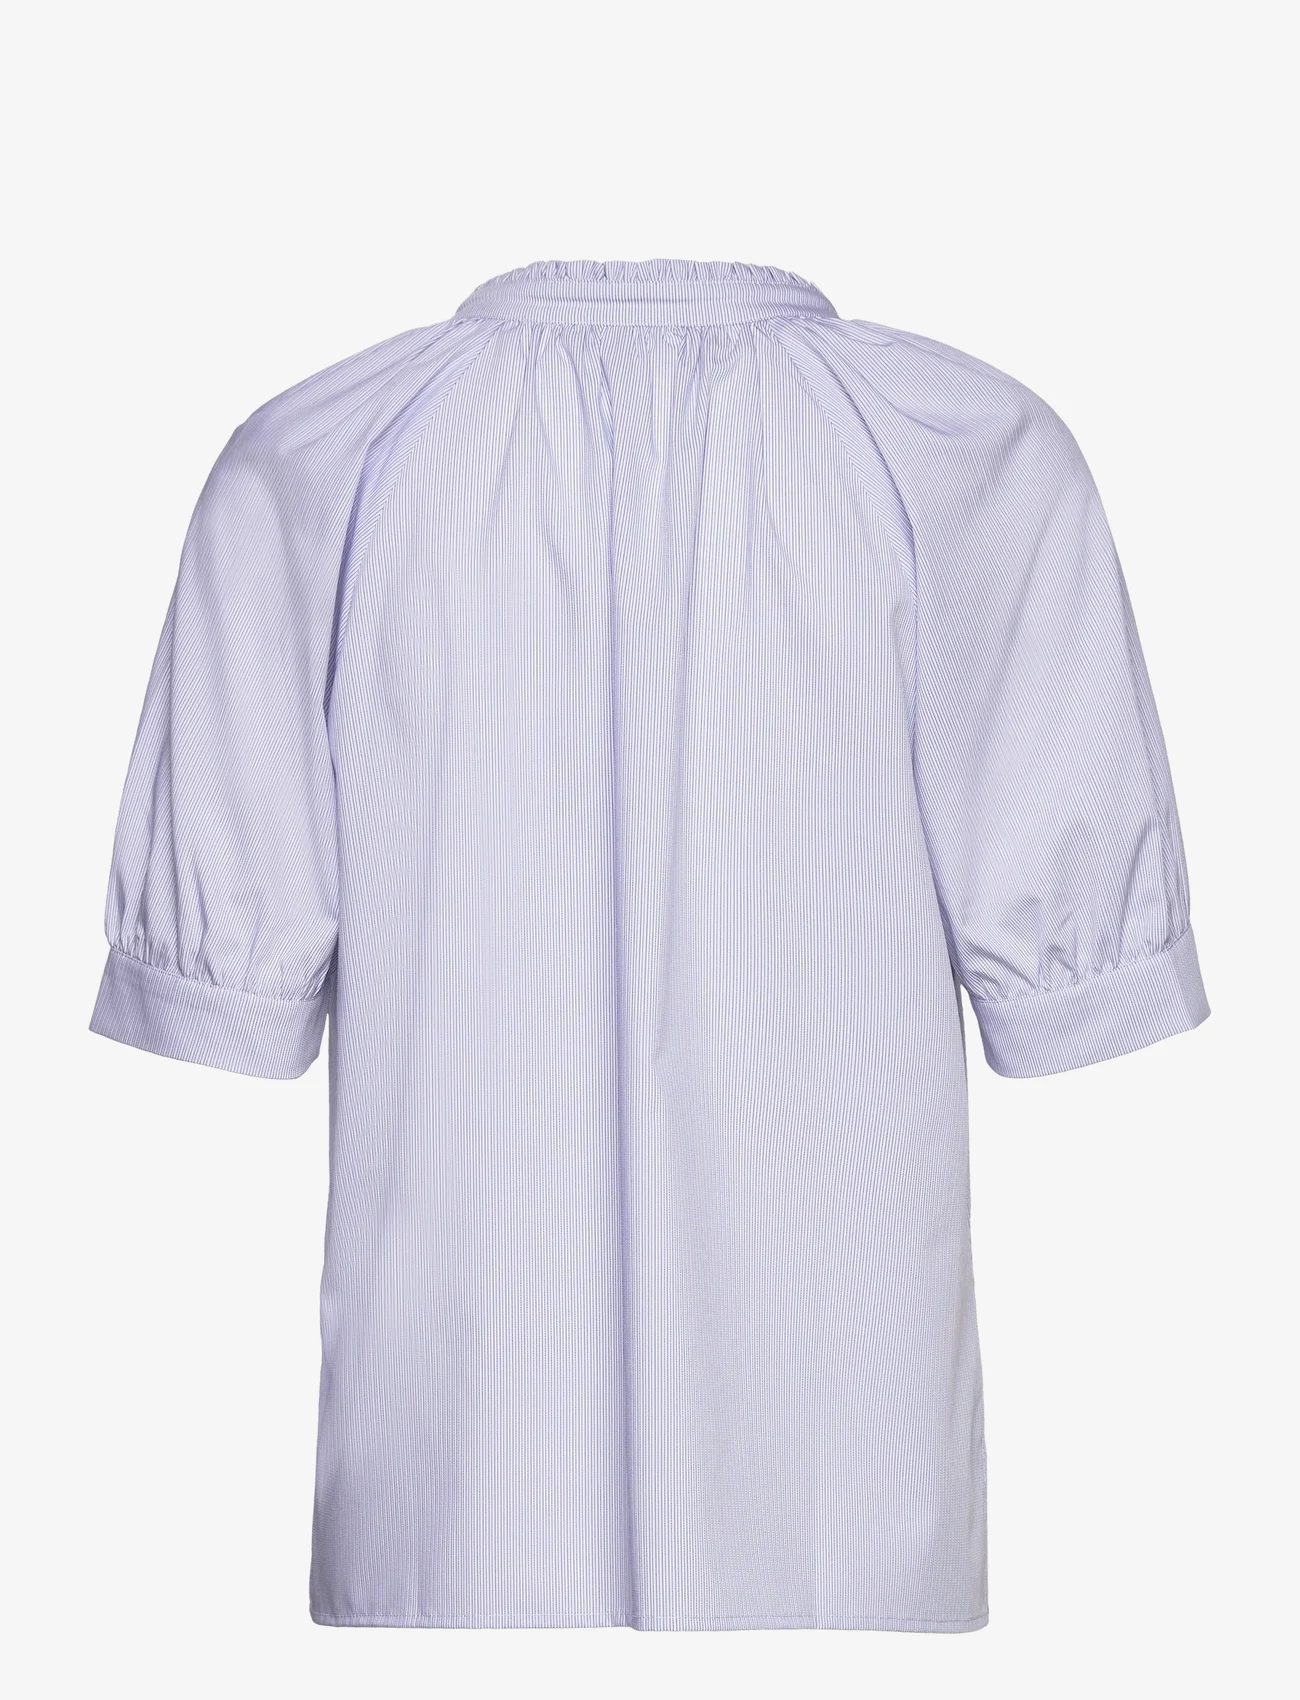 Coster Copenhagen - Shirt with thin stripes - kortærmede skjorter - blue stripe - 1